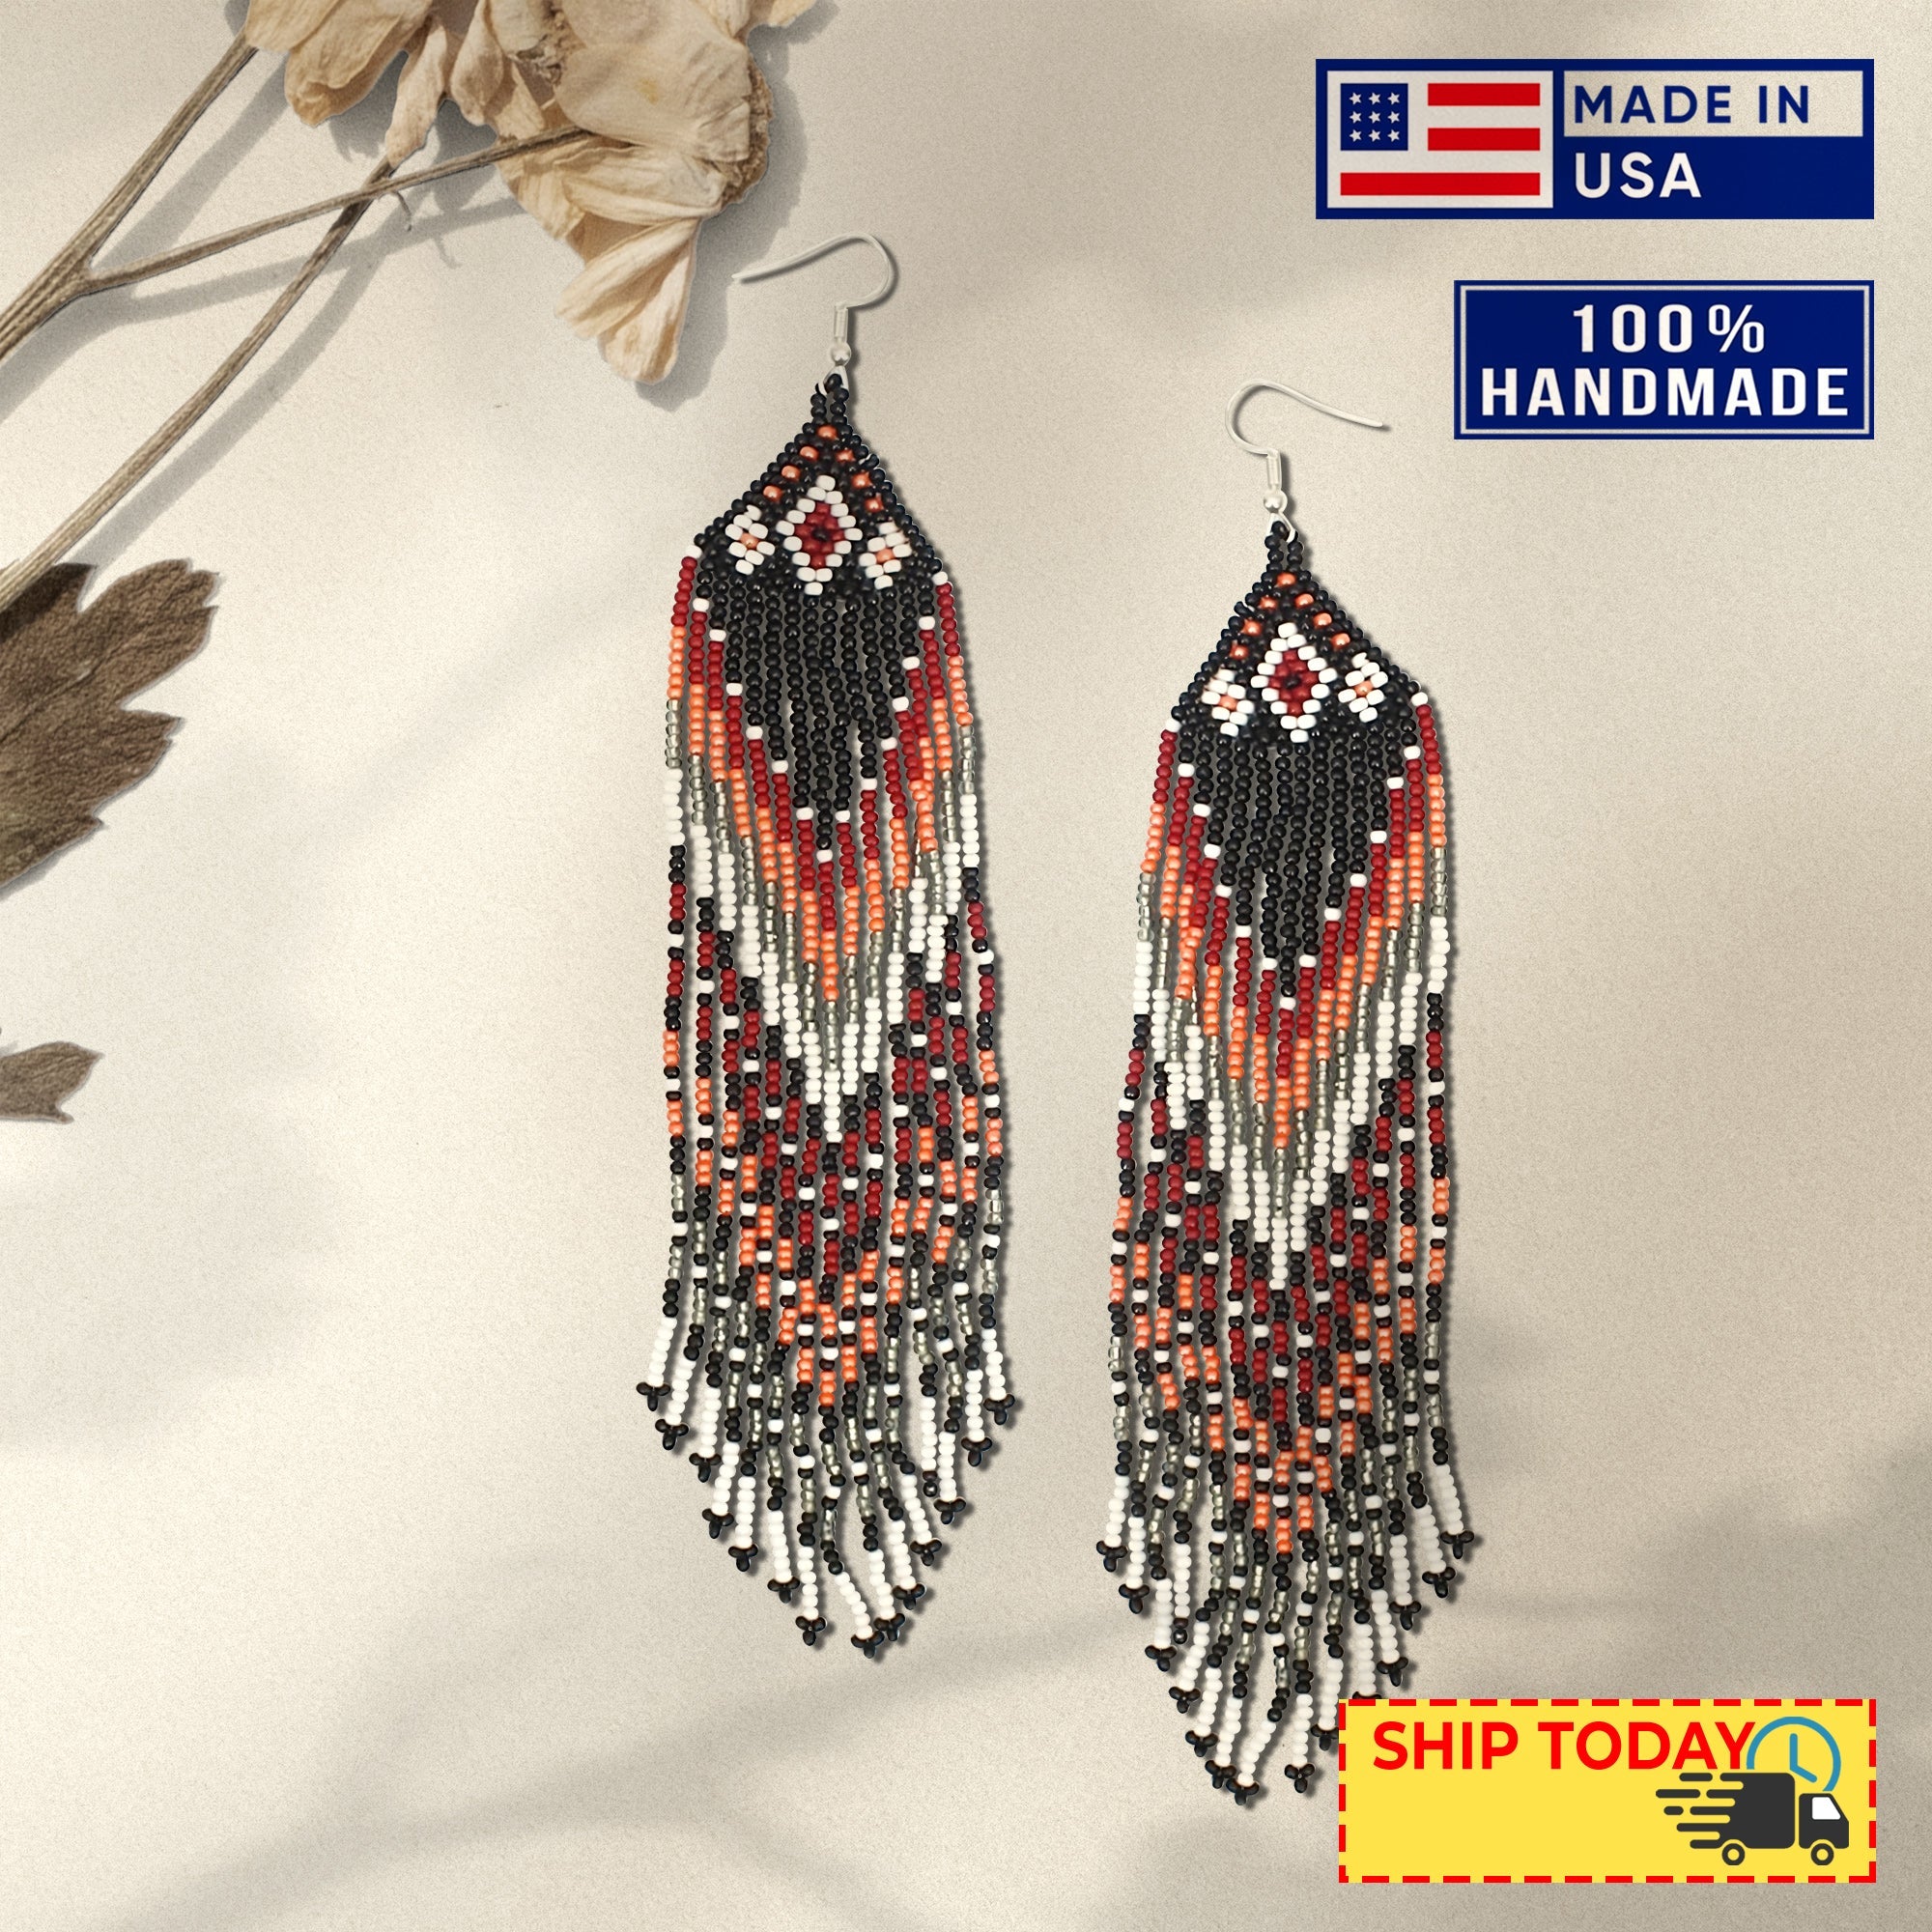 SALE 50% OFF - Black Red Peach Long Beaded Handmade Earrings For Women